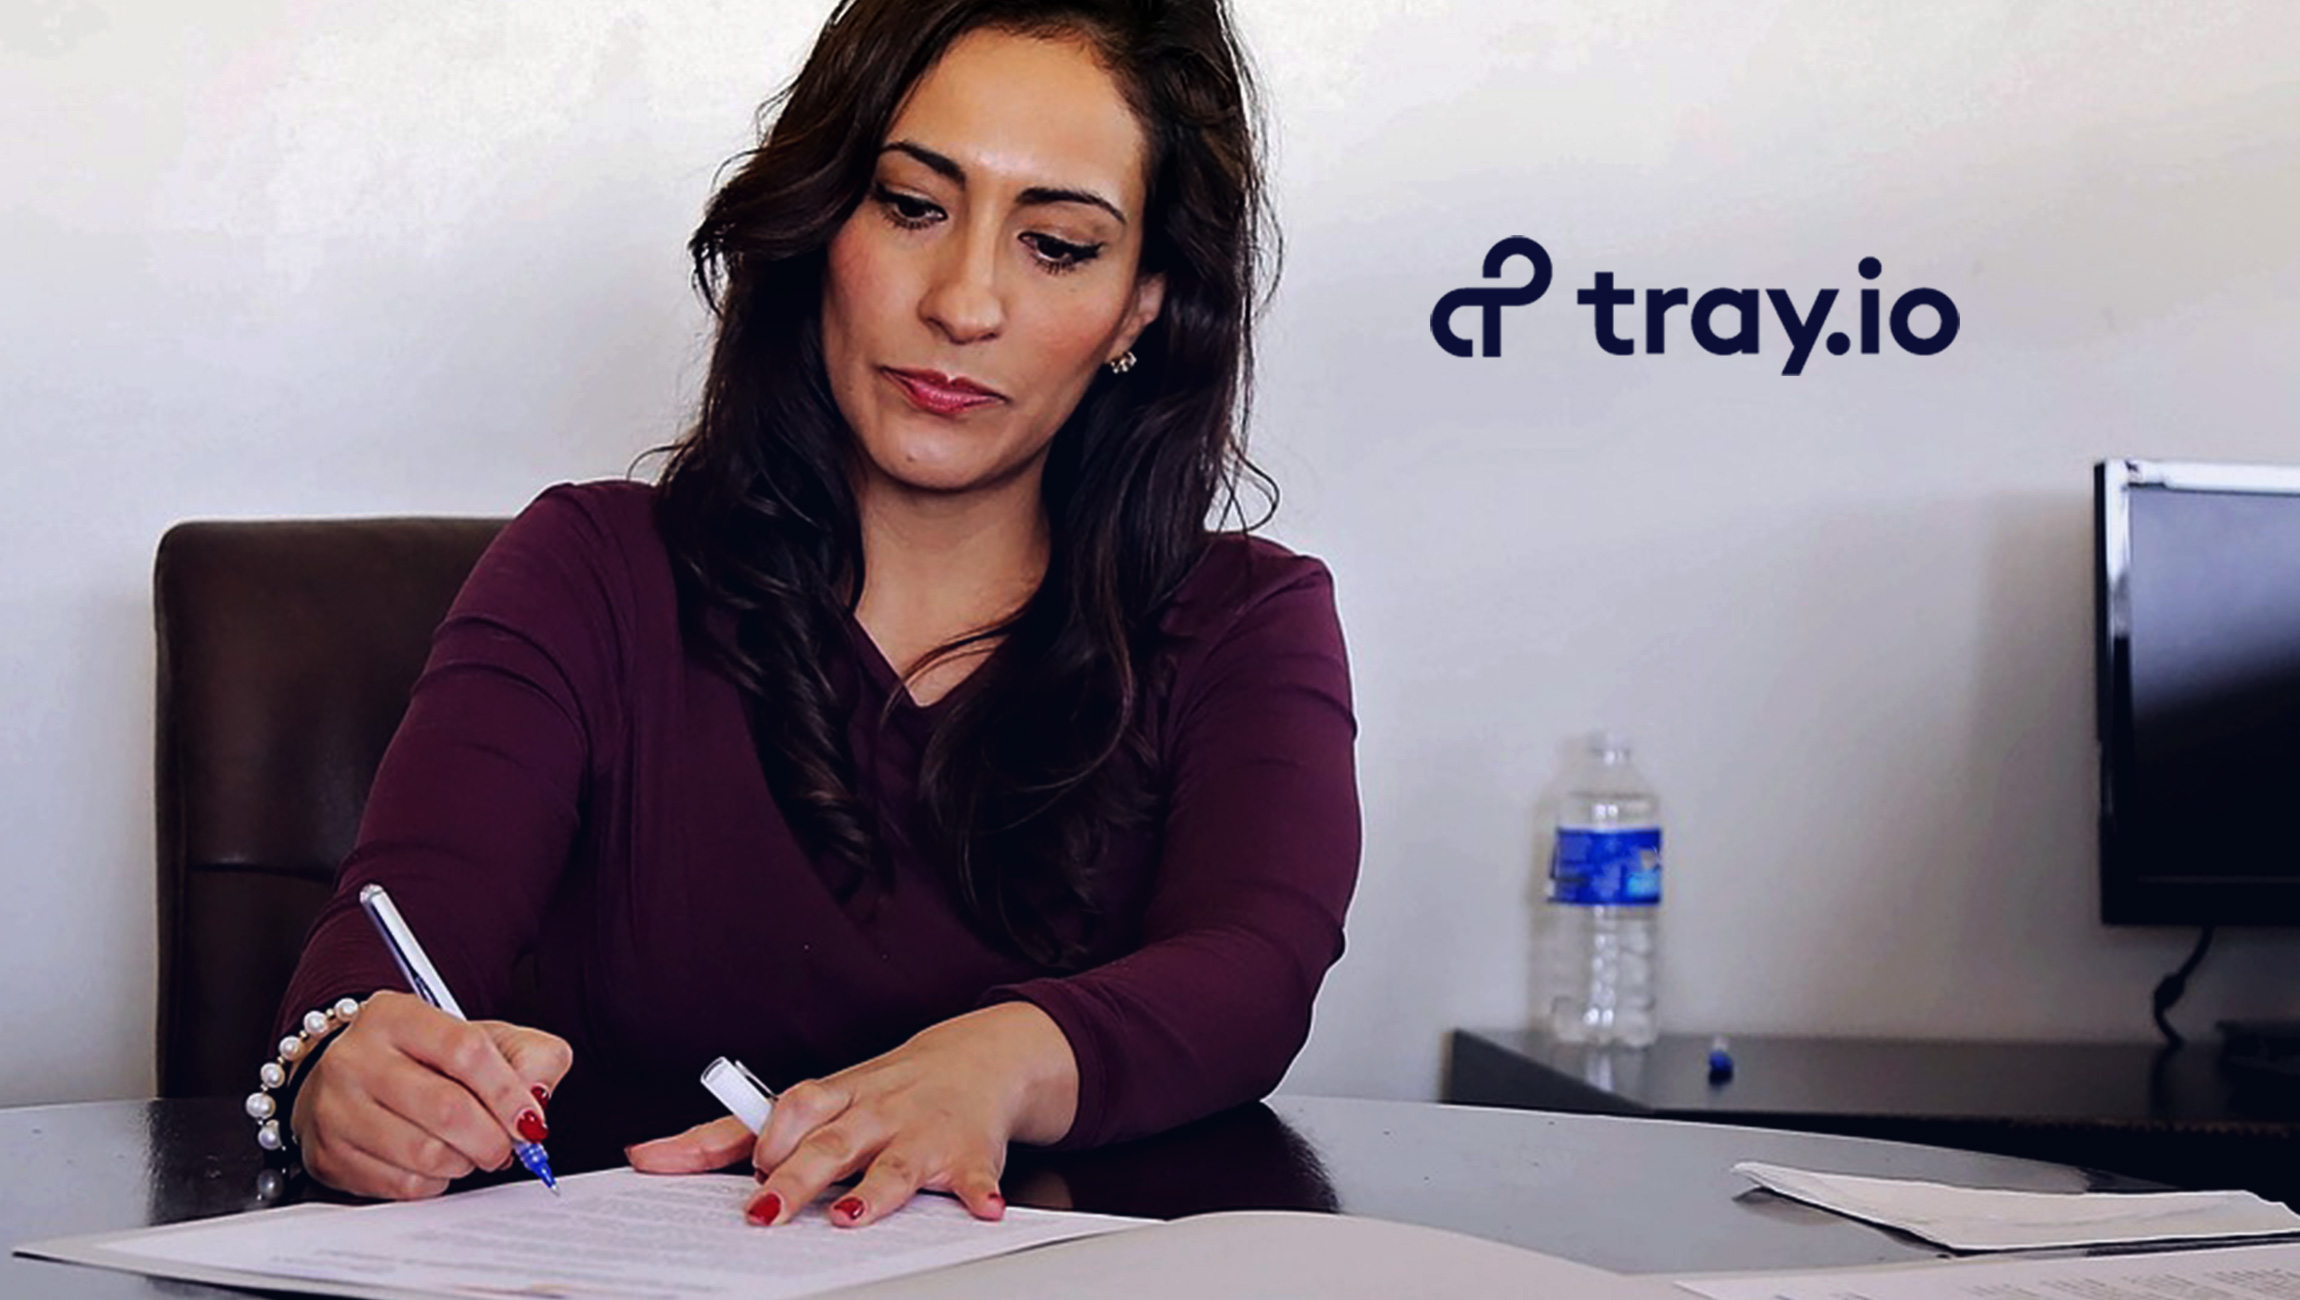 Demandbase Automates High-Impact Campaign Experiences with Tray.io to Increase Customer Lifetime Value